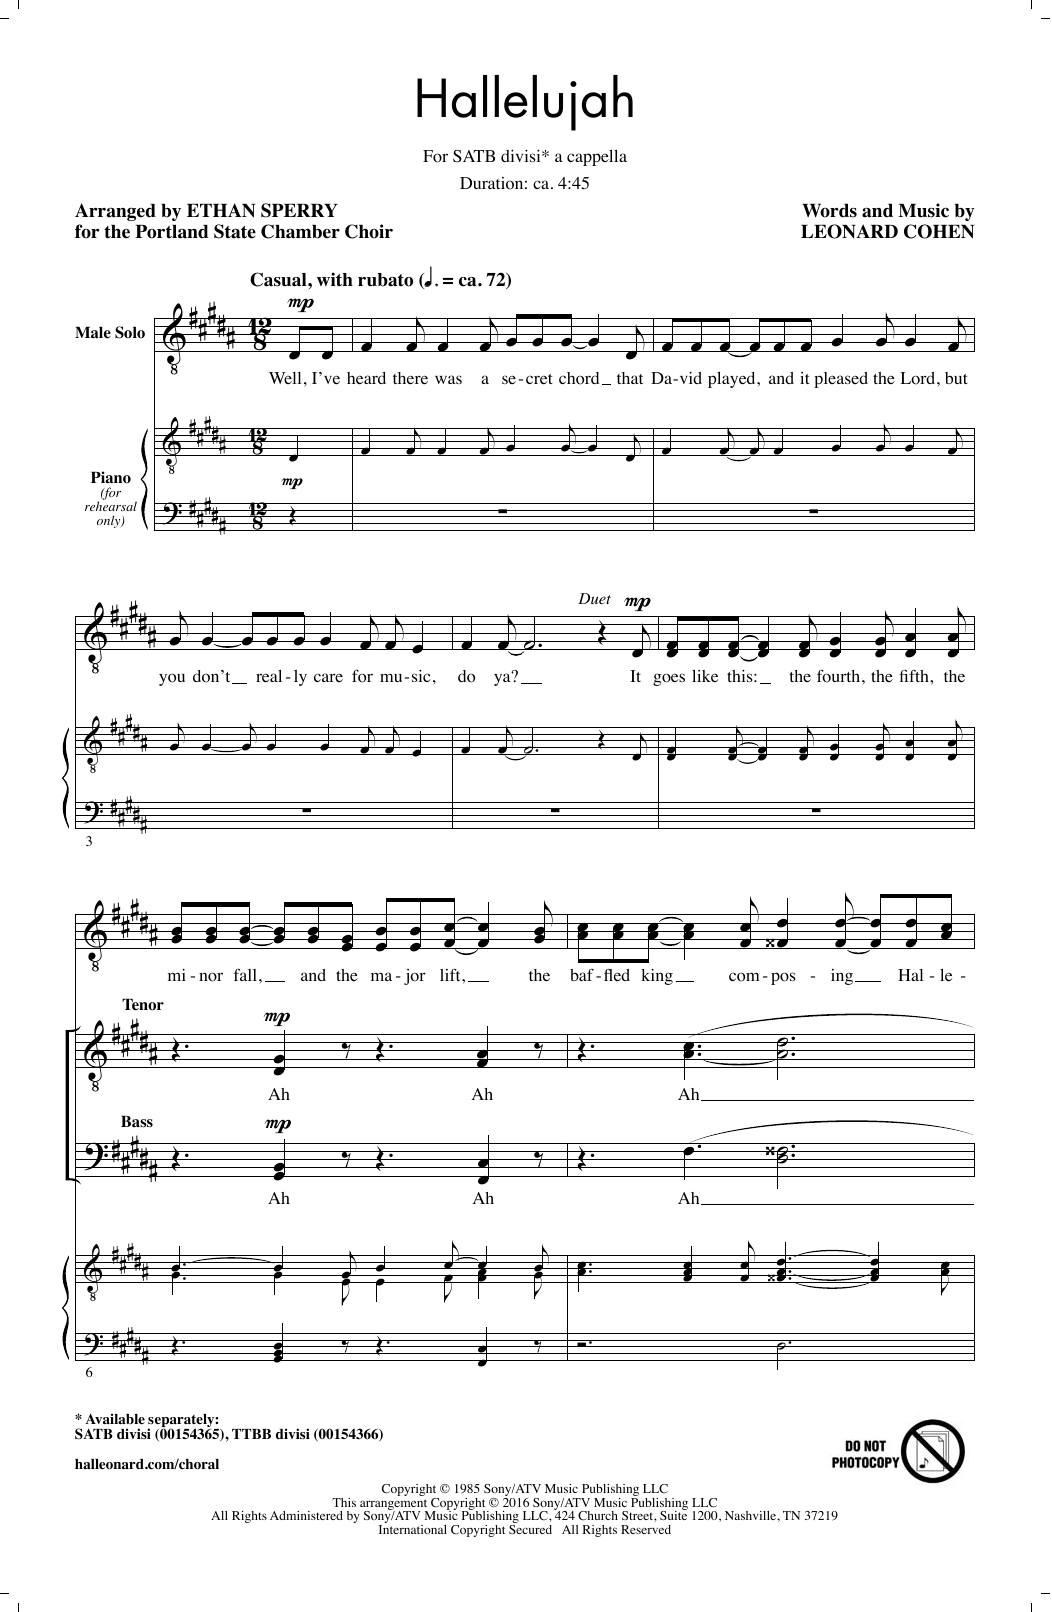 Leonard Cohen Hallelujah (arr. Ethan Sperry) Sheet Music Notes & Chords for TTBB - Download or Print PDF